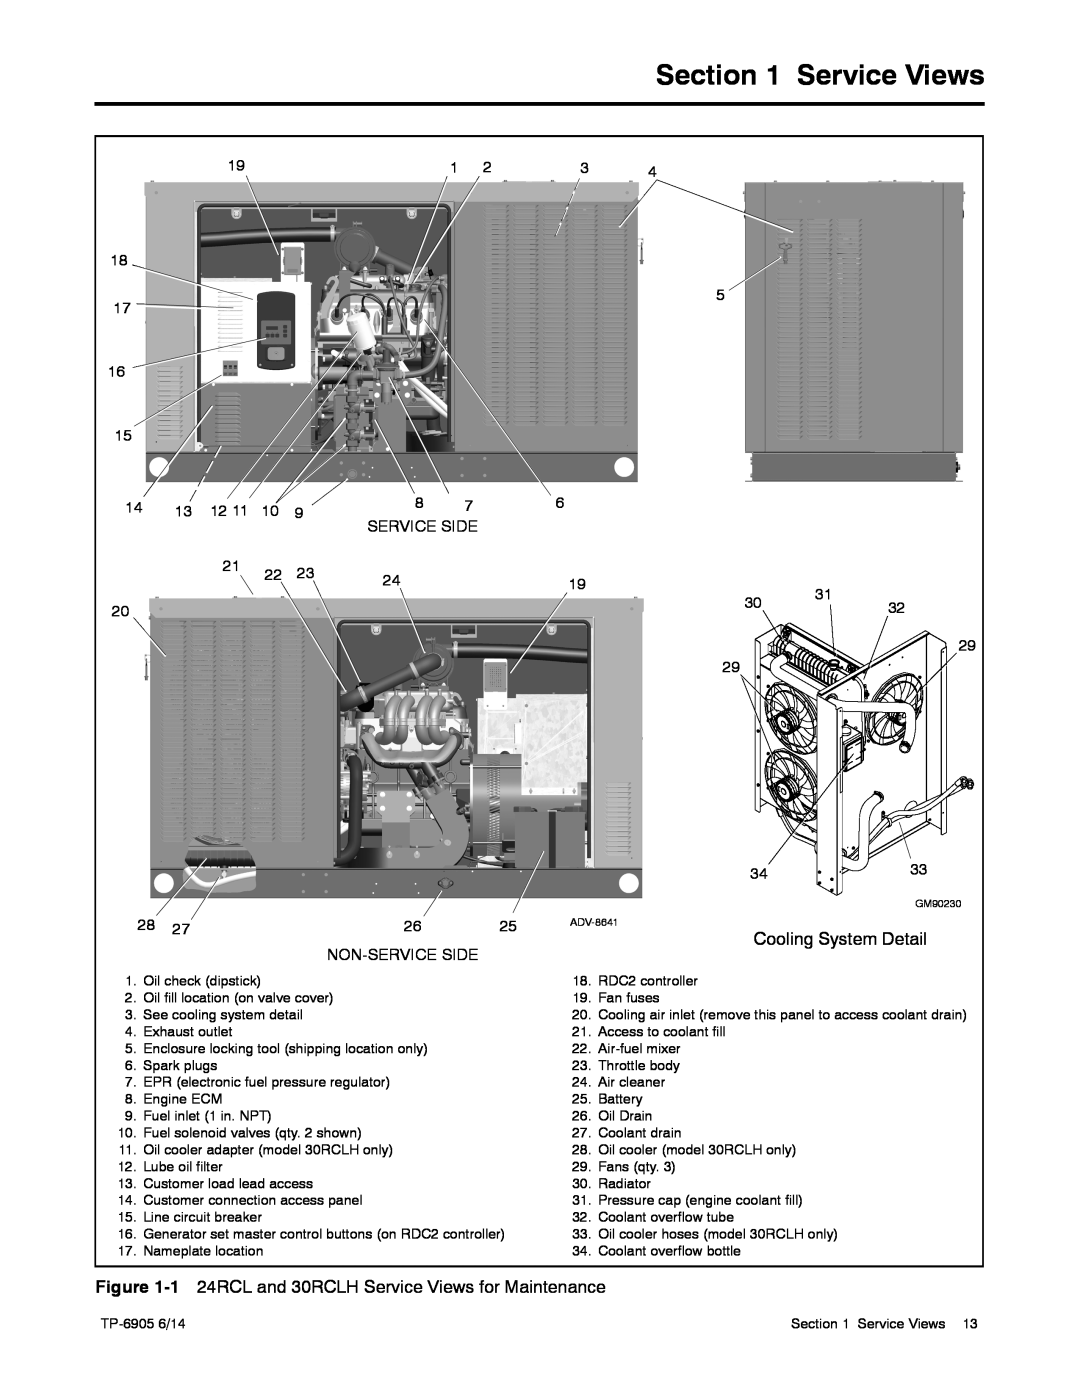 Kohler 24RCL manual Service Views, Cooling System Detail 